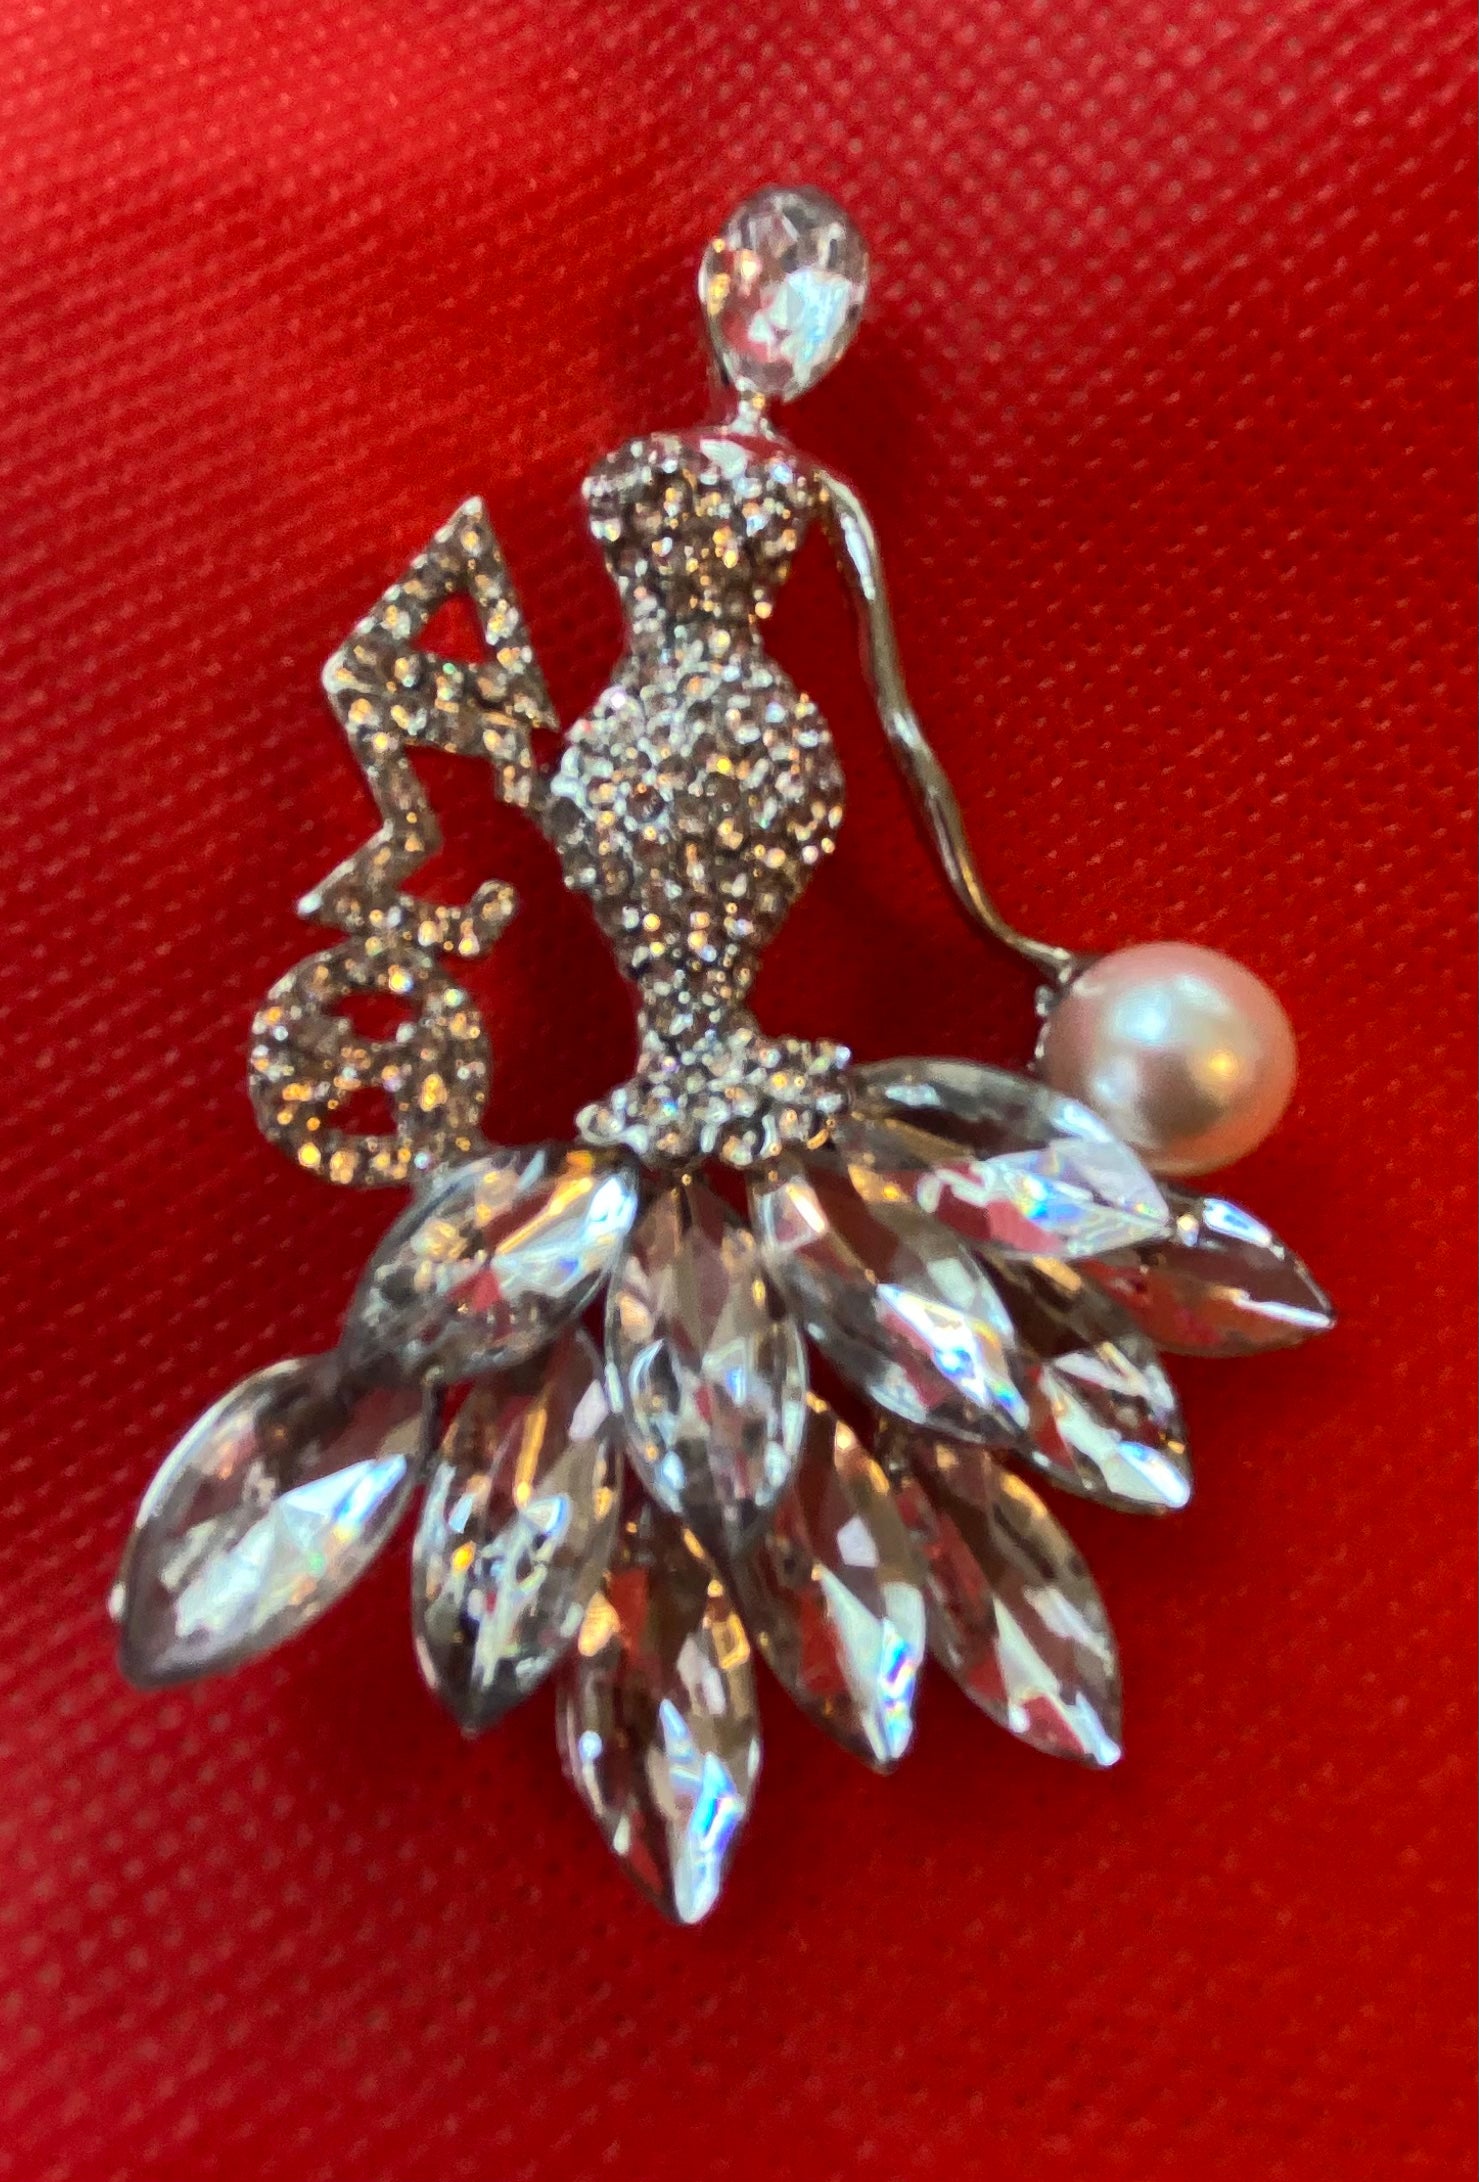 A Delta Crystal Lady Brooch in Silver